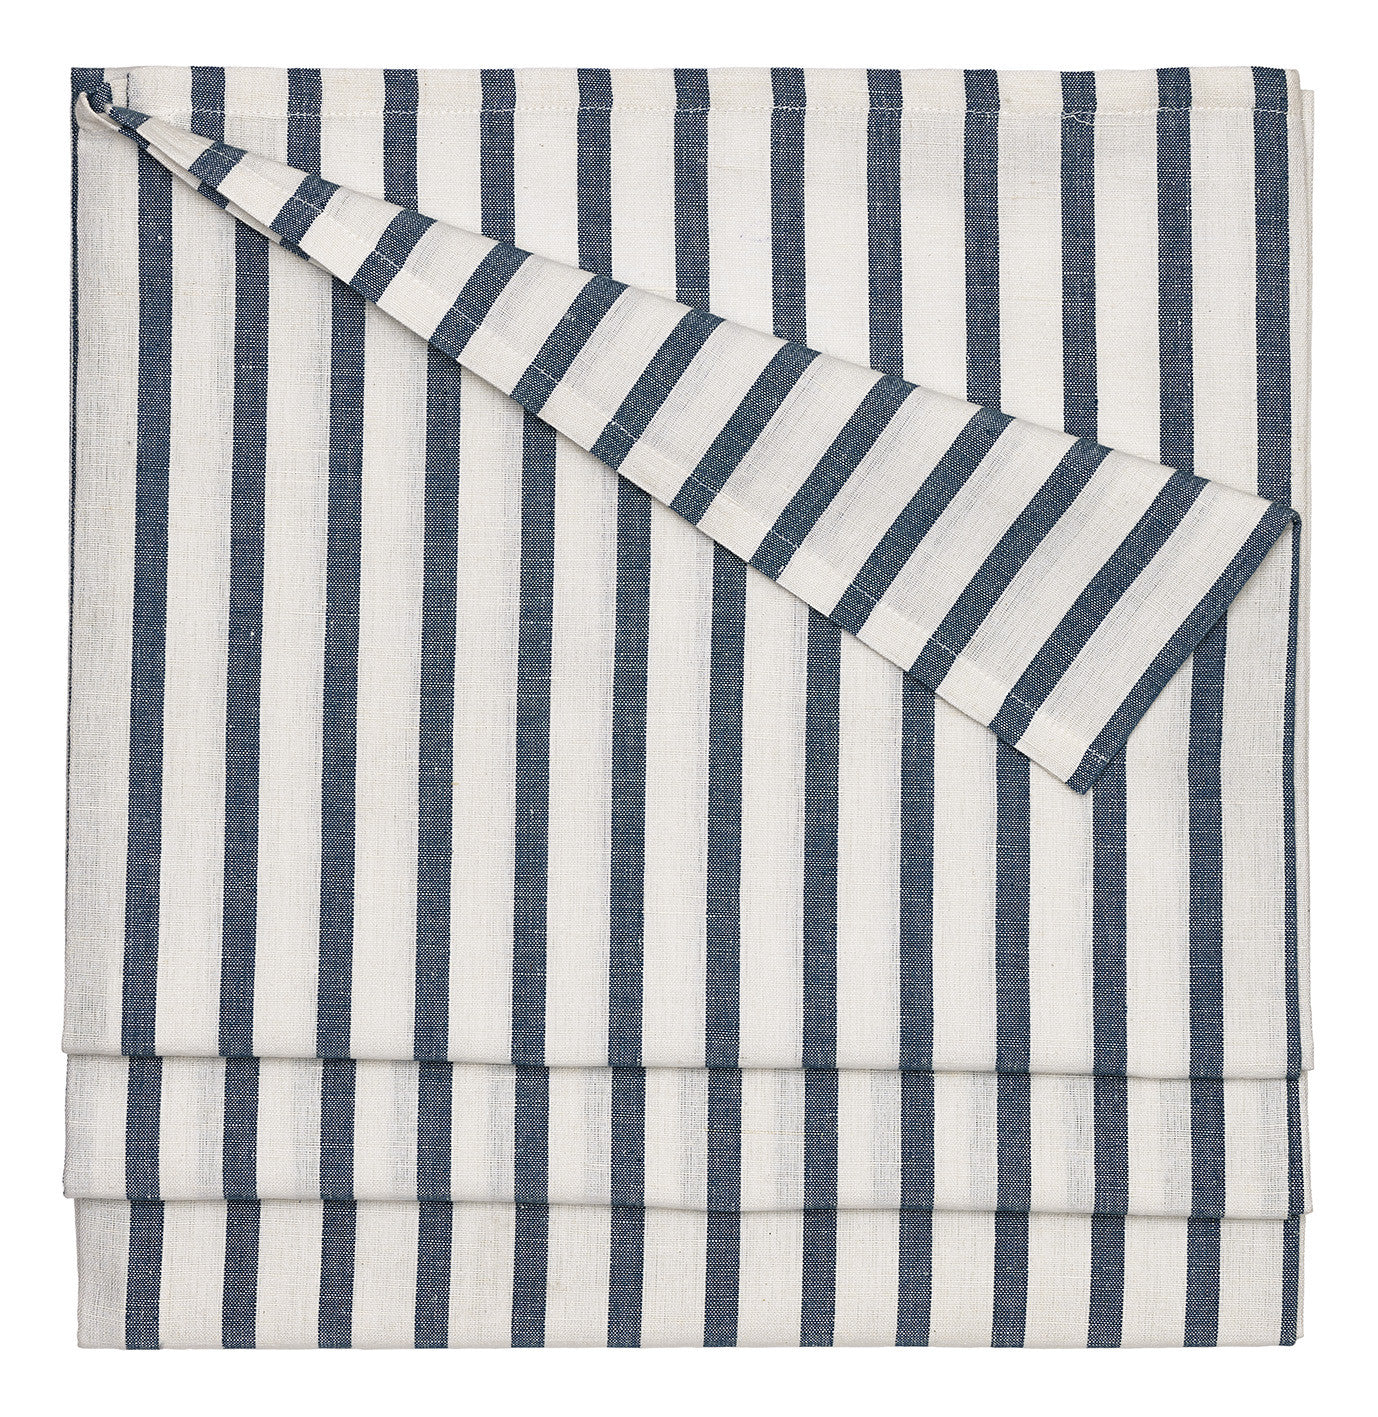 Autumn Ticking Stripe Cotton Linen Tablecloth in Dark Petrol Blue 145x180cm (58x72") Canada USA